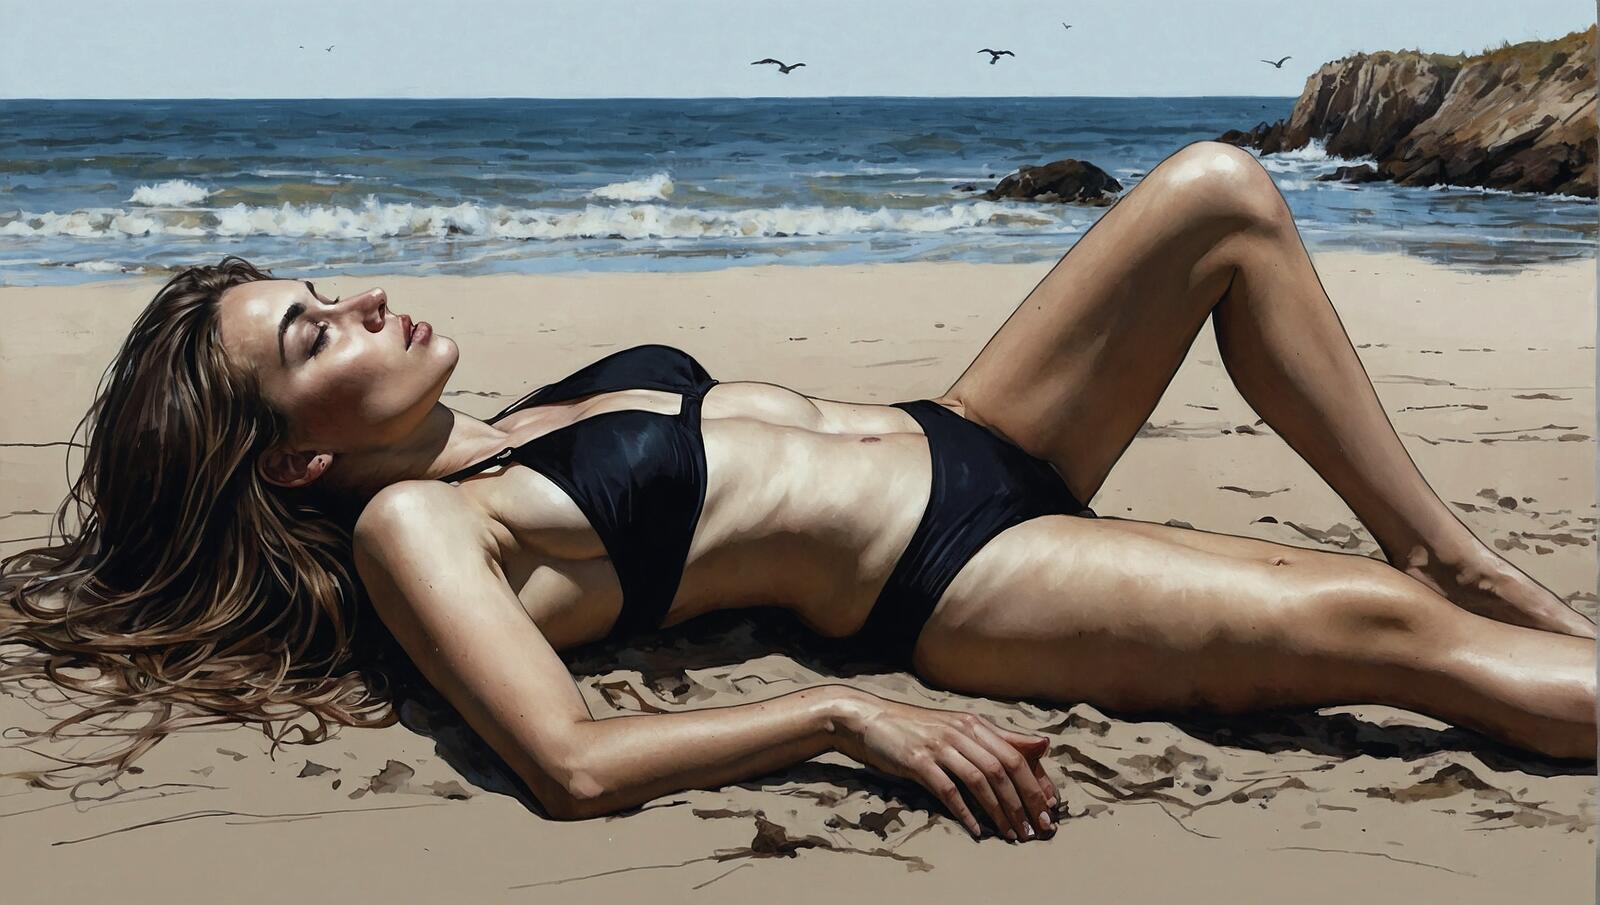 Free photo Bikini-clad woman lying on the beach with seagulls in the background